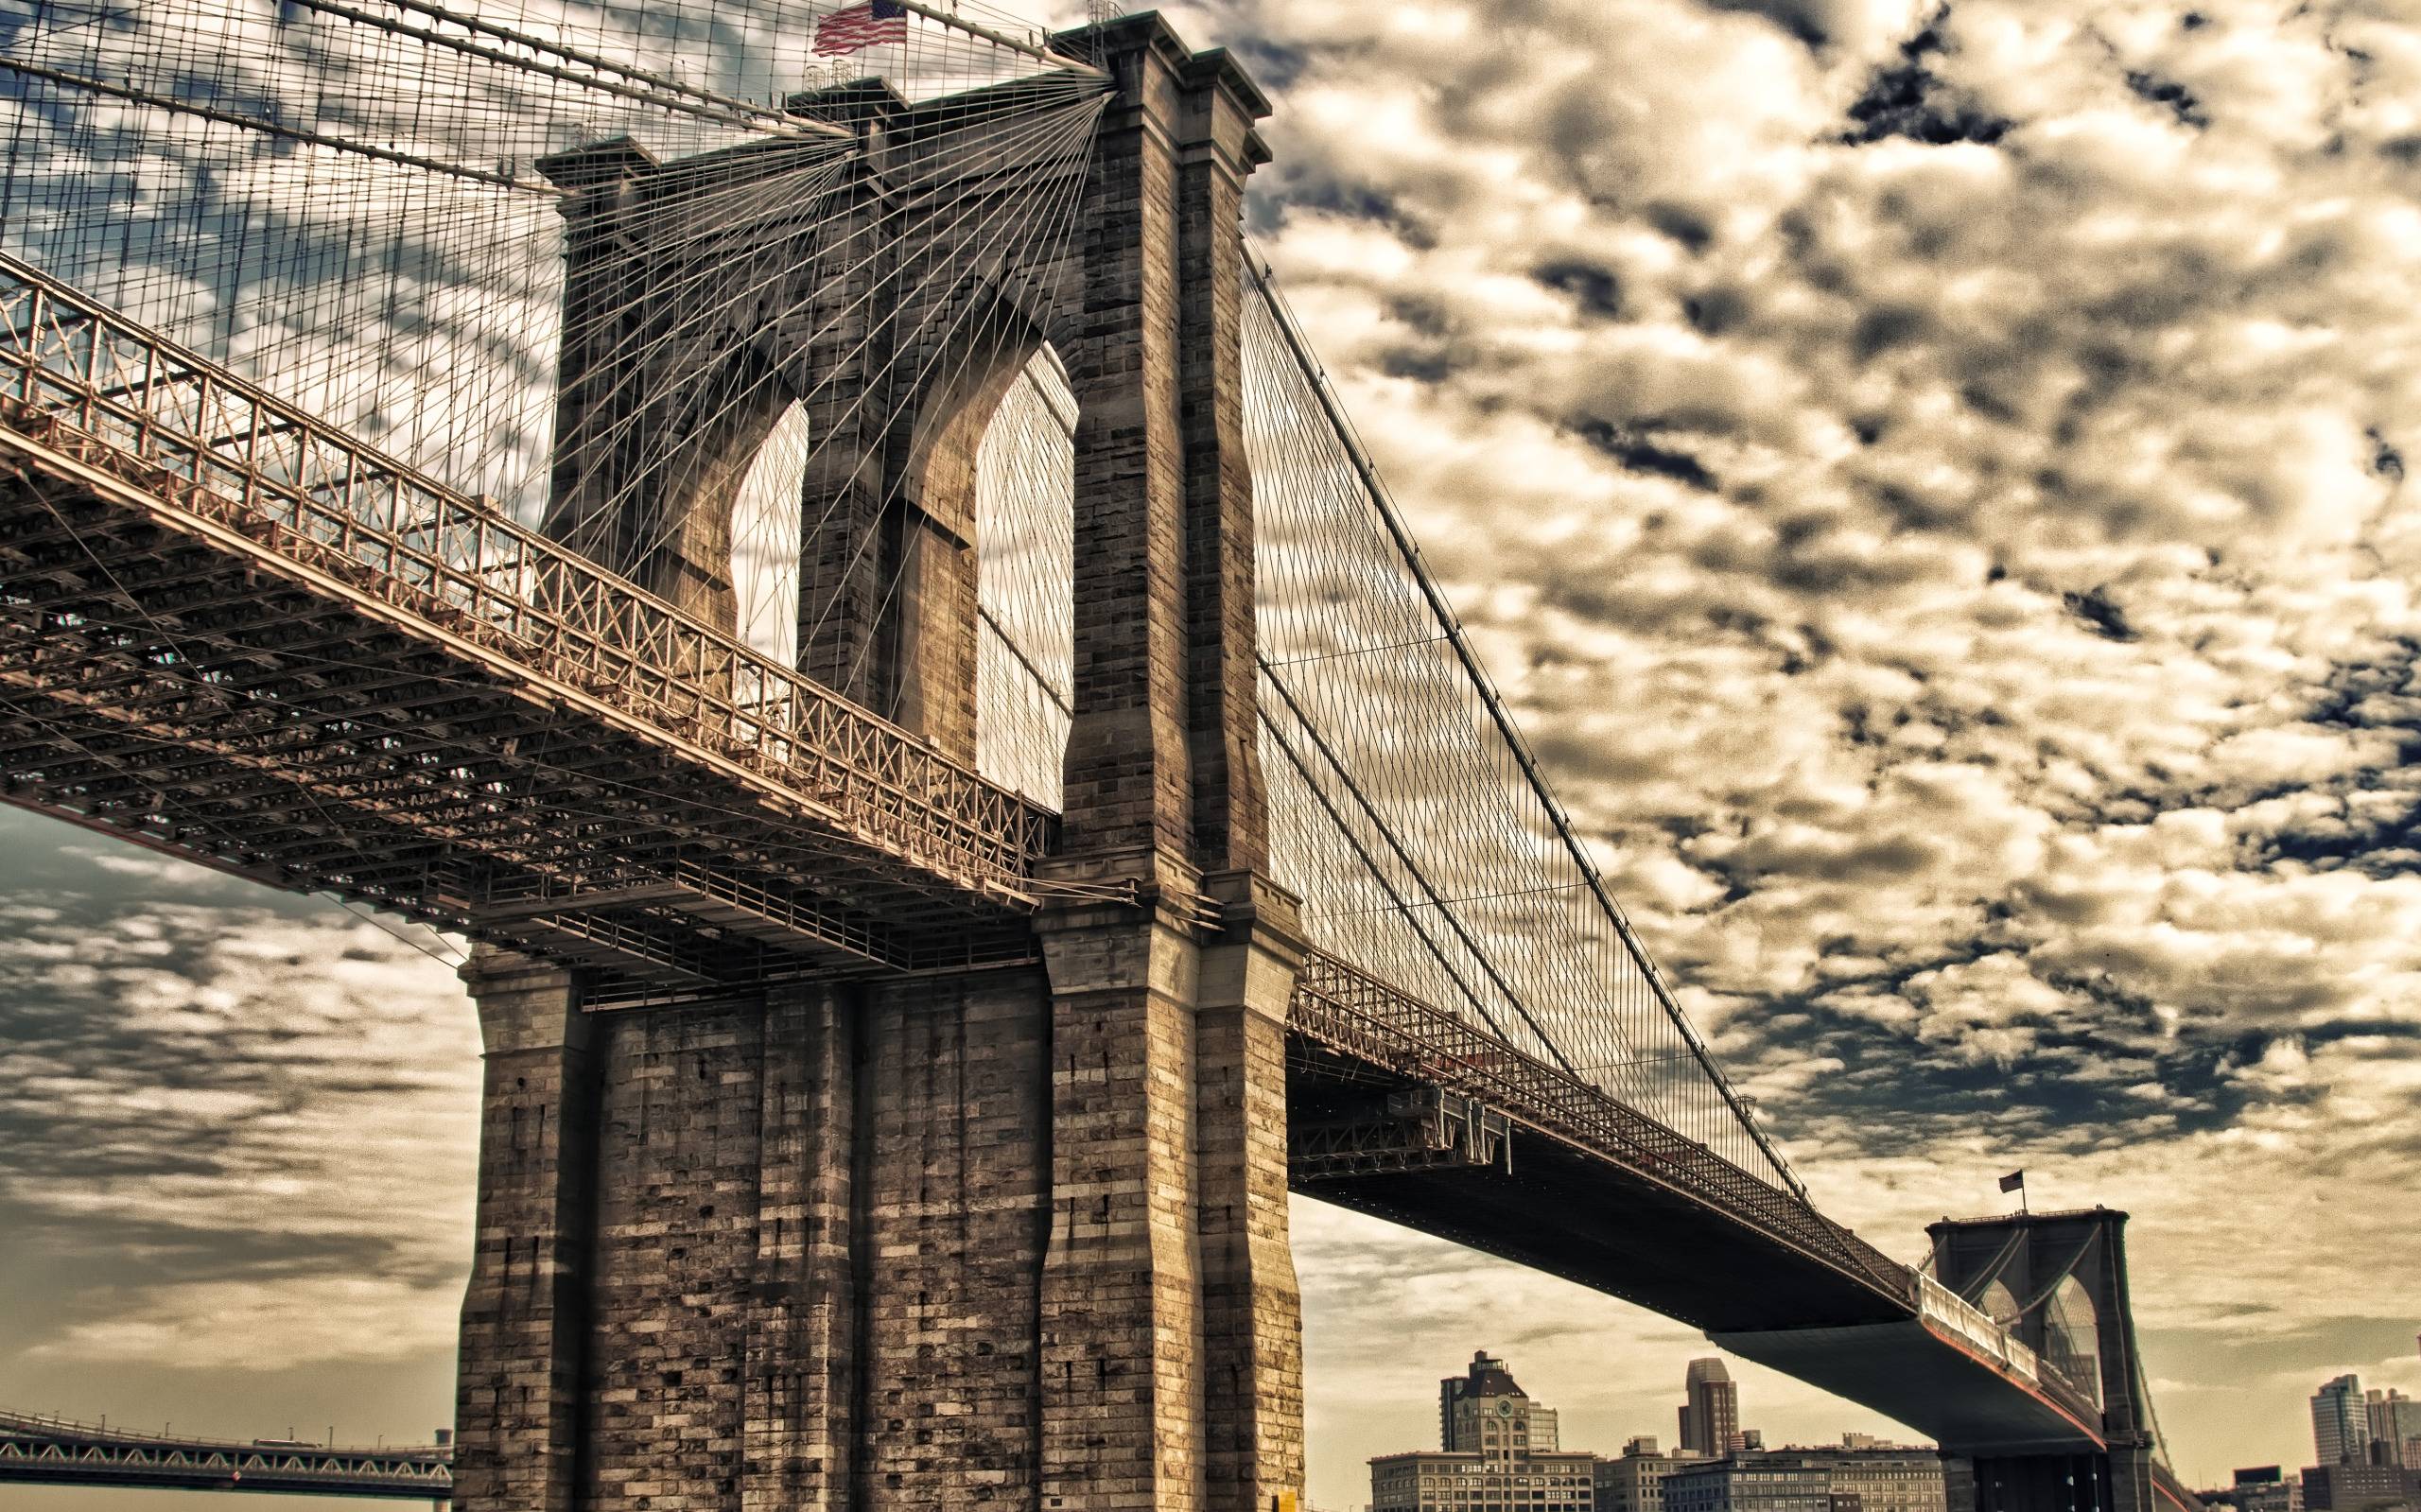 Brooklyn Bridge, New York City widescreen wallpaper. Wide